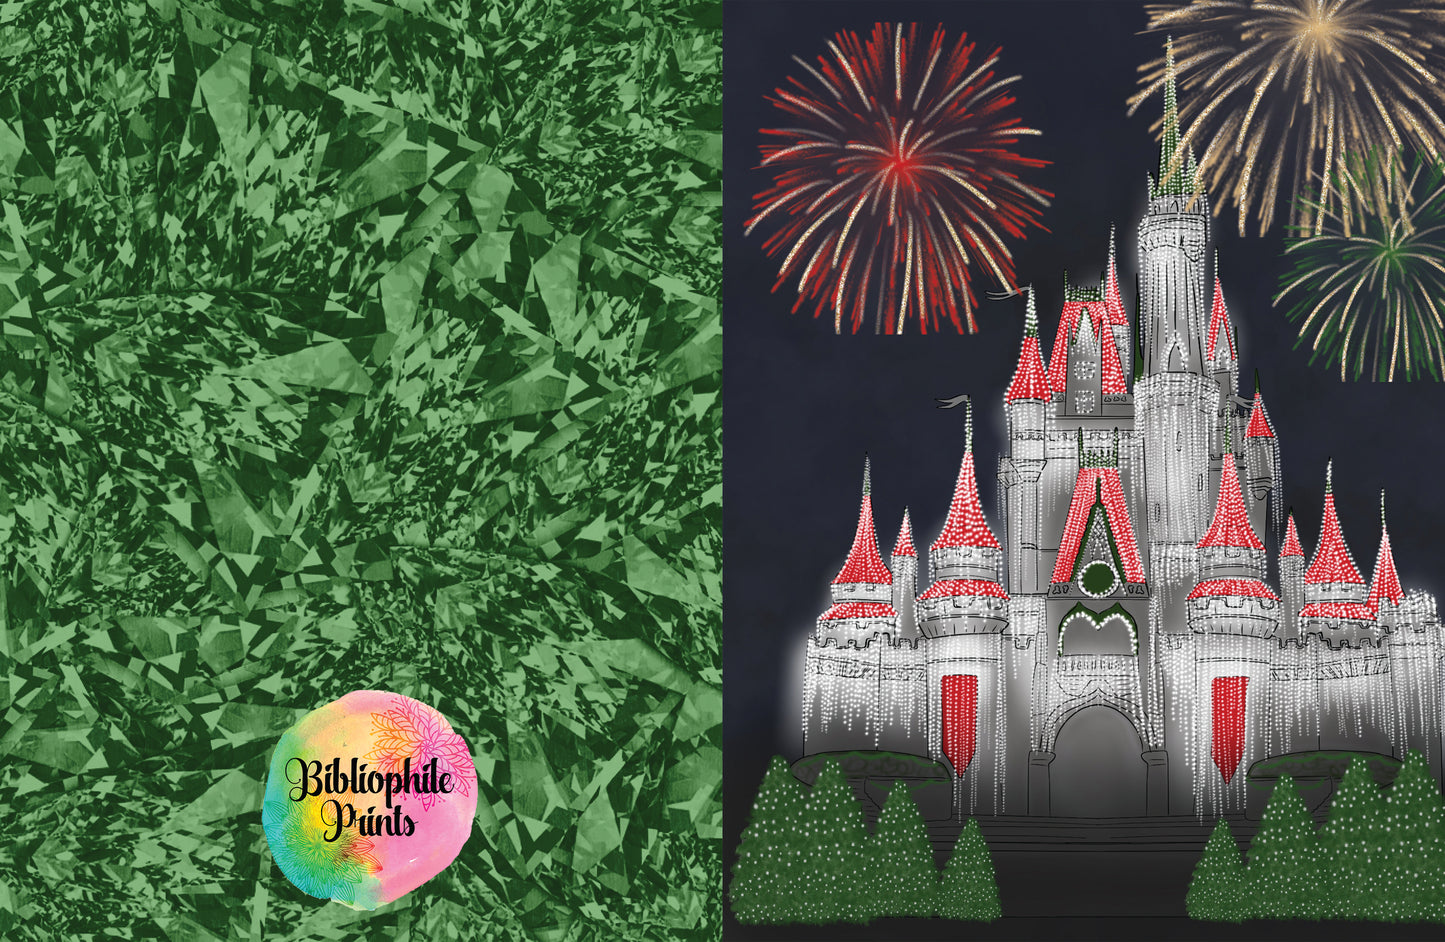 Magic Castle Christmas Greeting Card